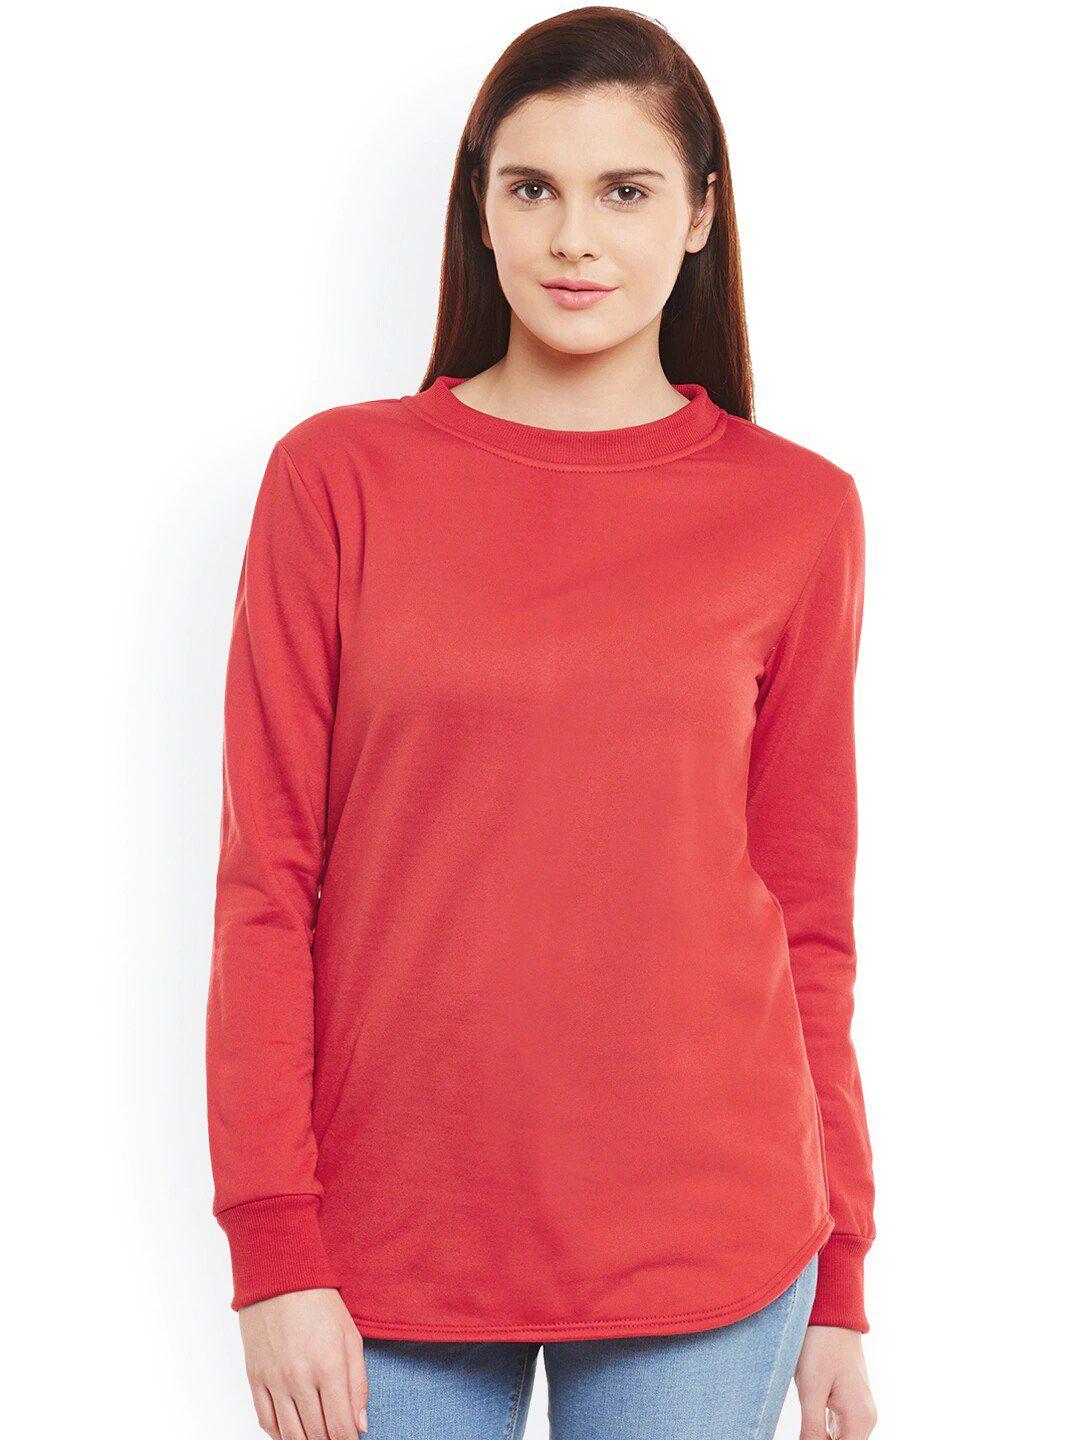 baesd-women-red-sweatshirt